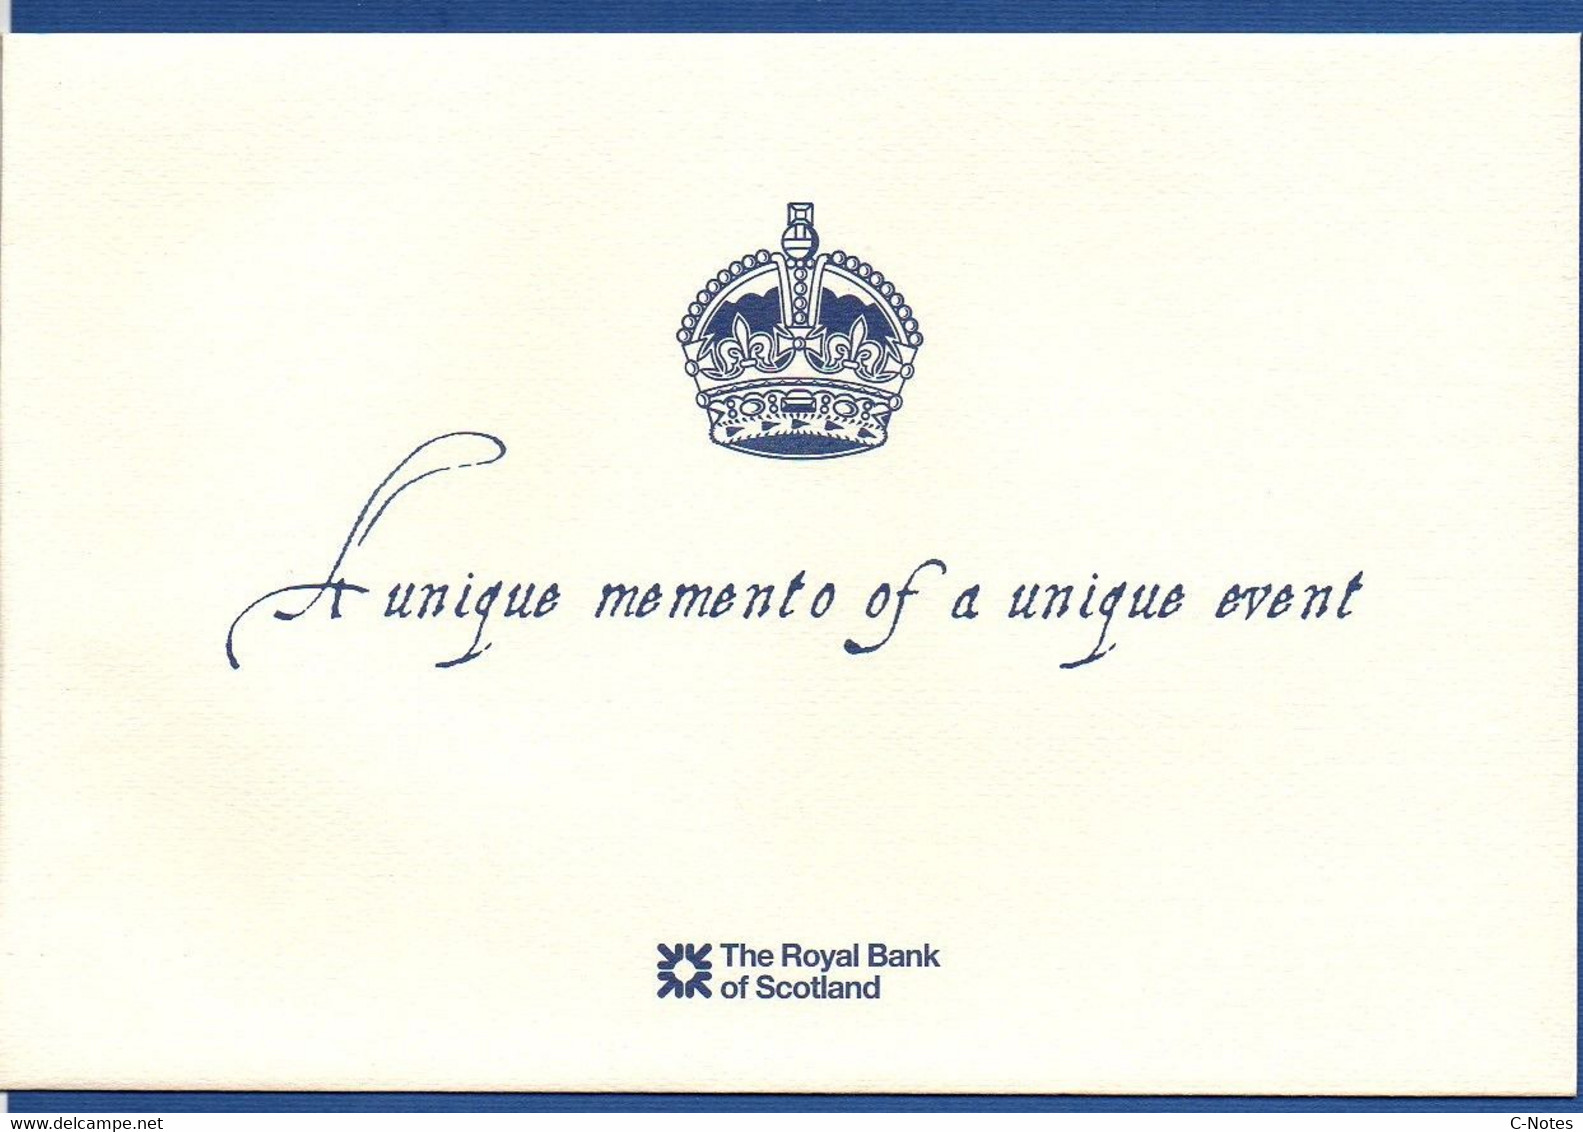 SCOTLAND - P.361 – 20 POUNDS 2000 UNC, Serie QETQM0000644 "Birth Centennial Of Queen Mother" Commemorative Issue -FOLDER - 20 Pounds